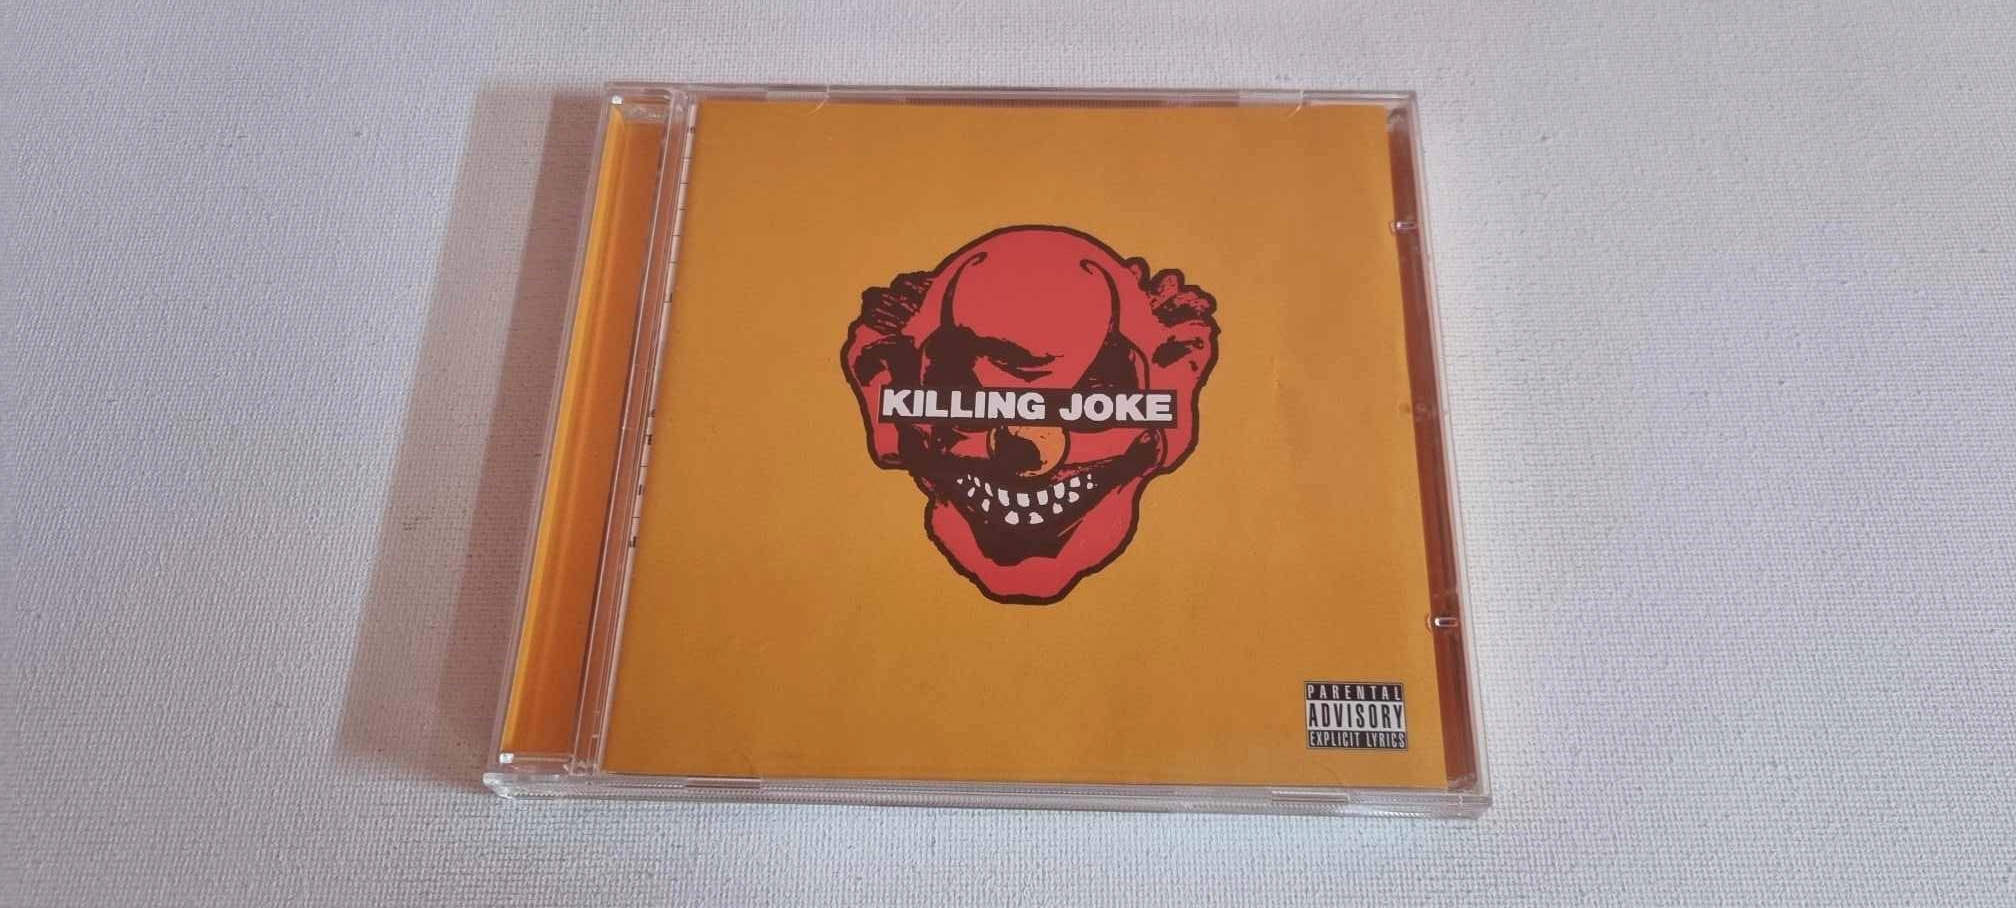 Killing Joke – Killing Joke CD